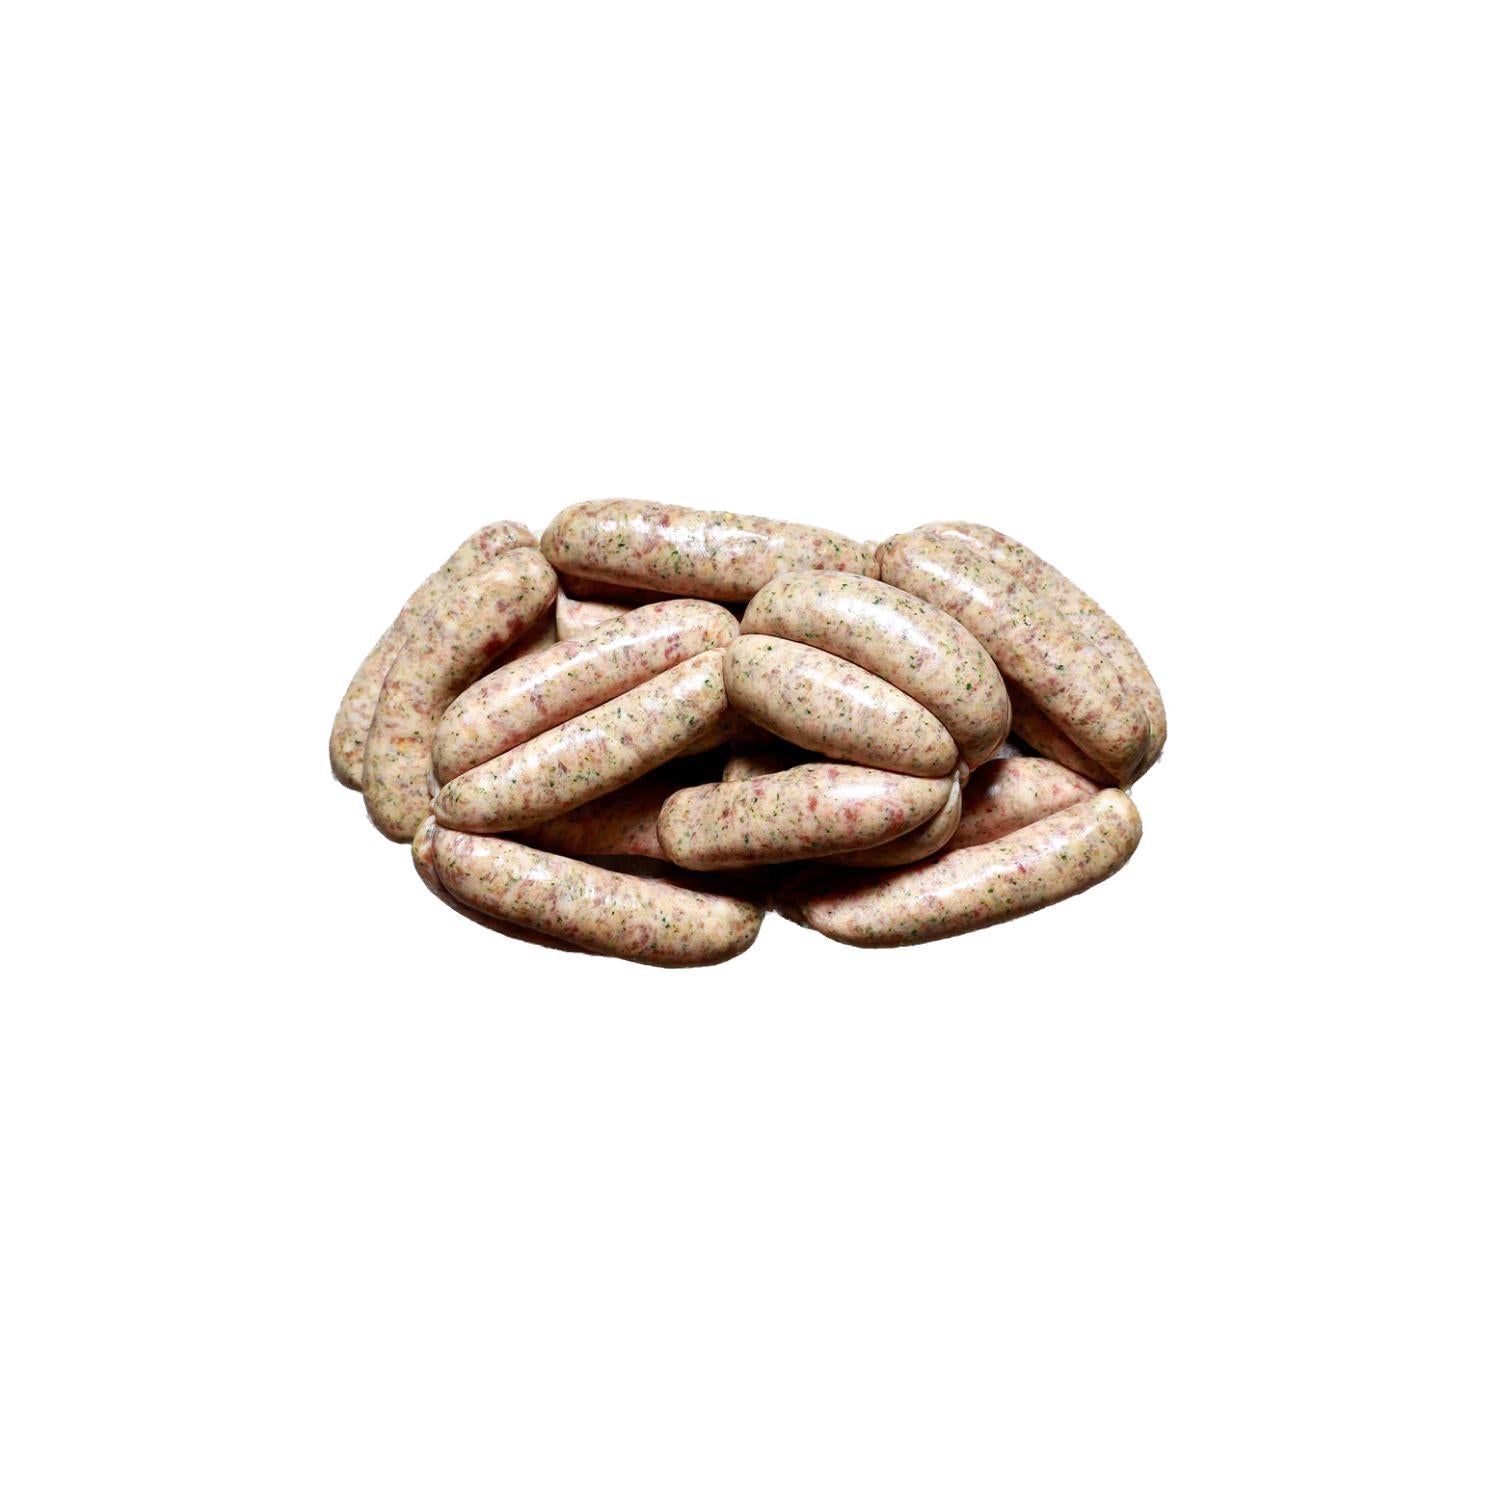 HG Walter - Cumberland Sausages